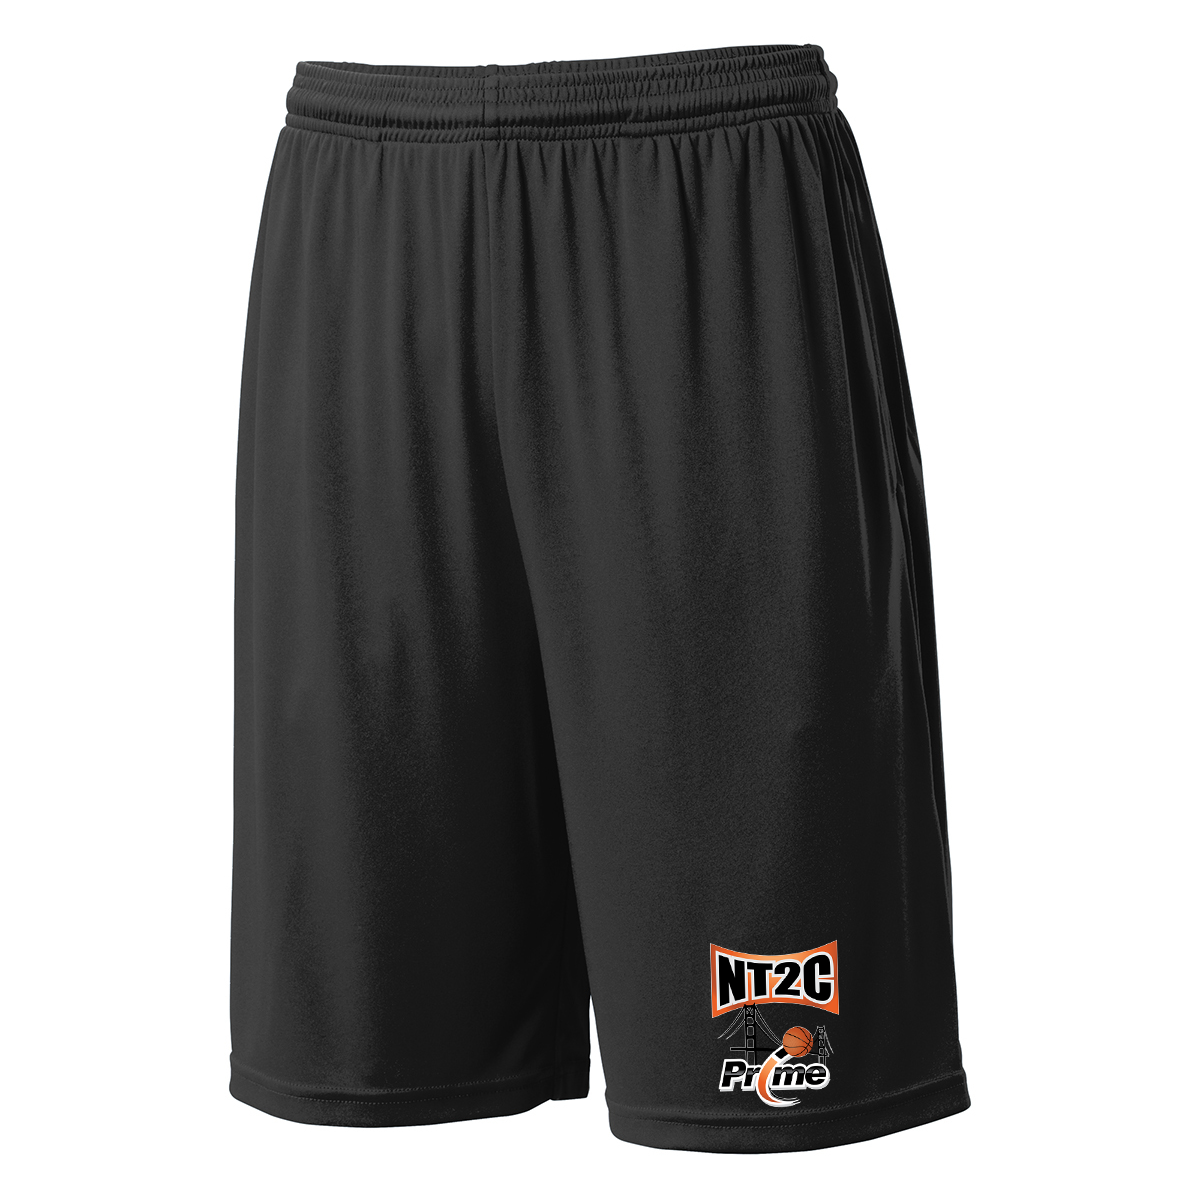 NT2C Prime Basketball Shorts